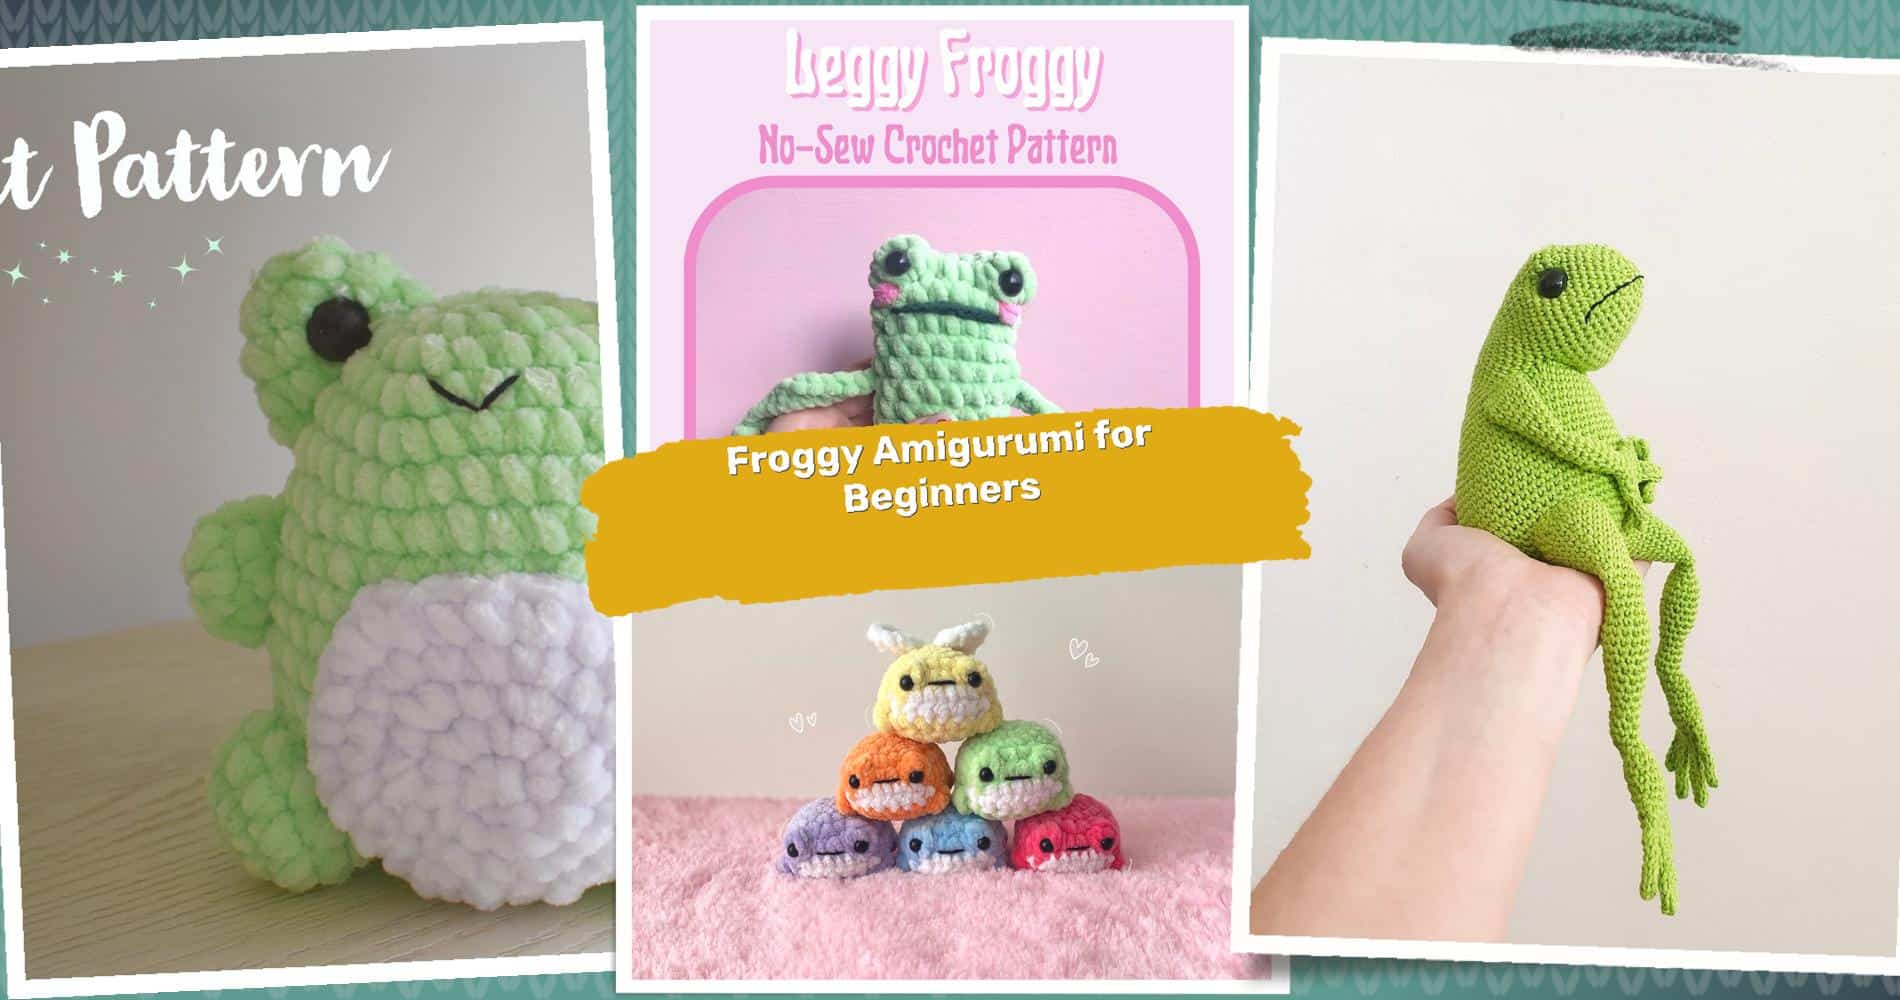 39 Frog Crochet Patterns: Create Adorable Amigurumi for Kids & Beginners